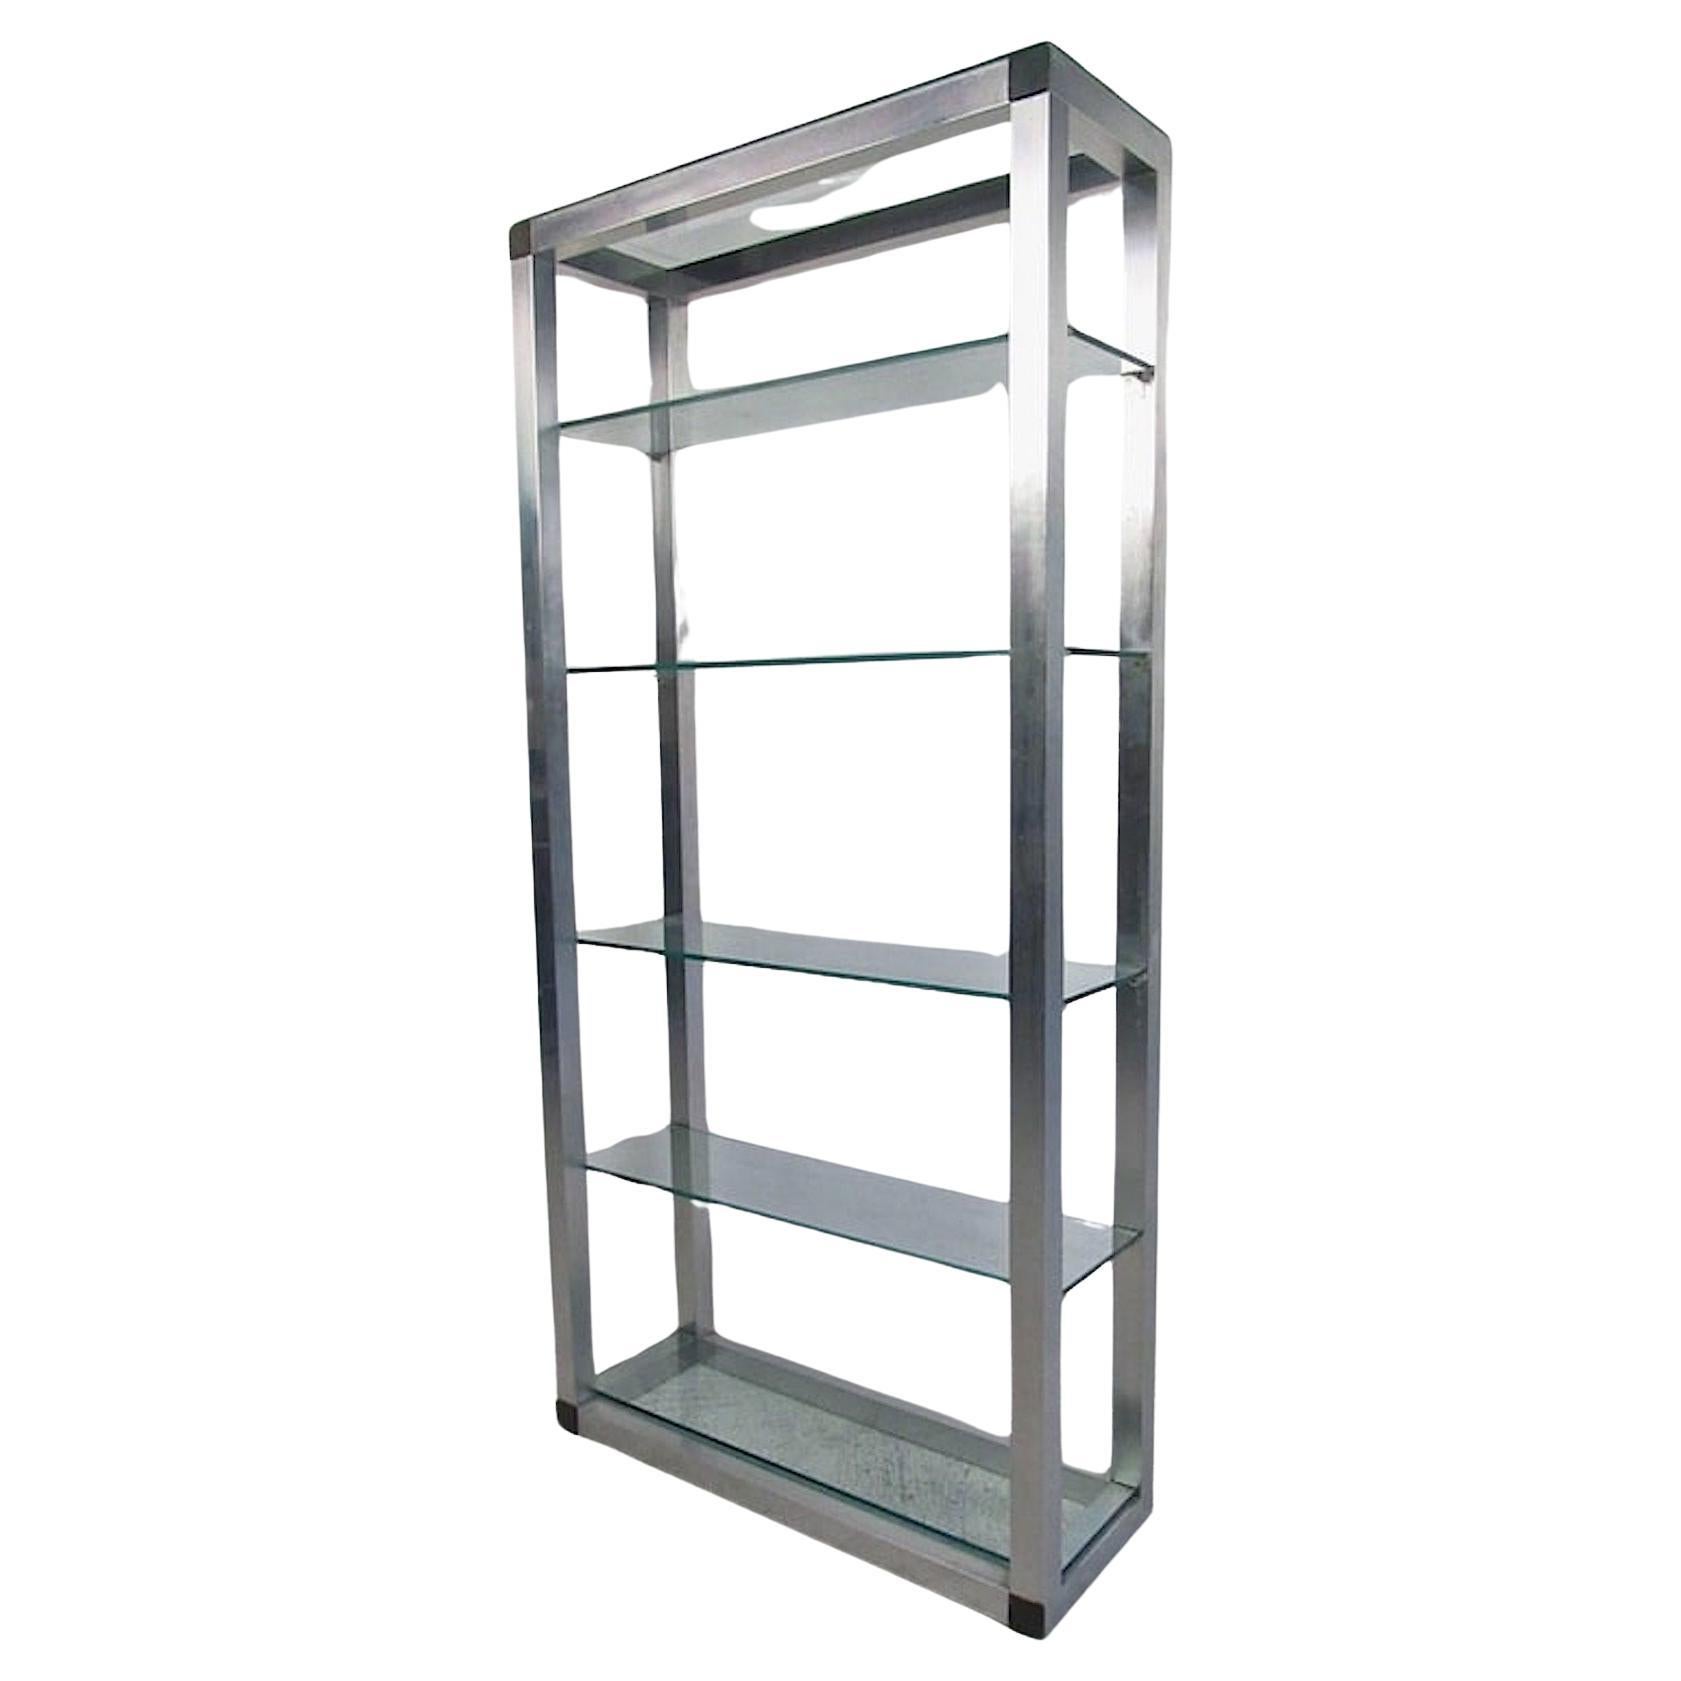 Aluminum & Glass Display Shelf